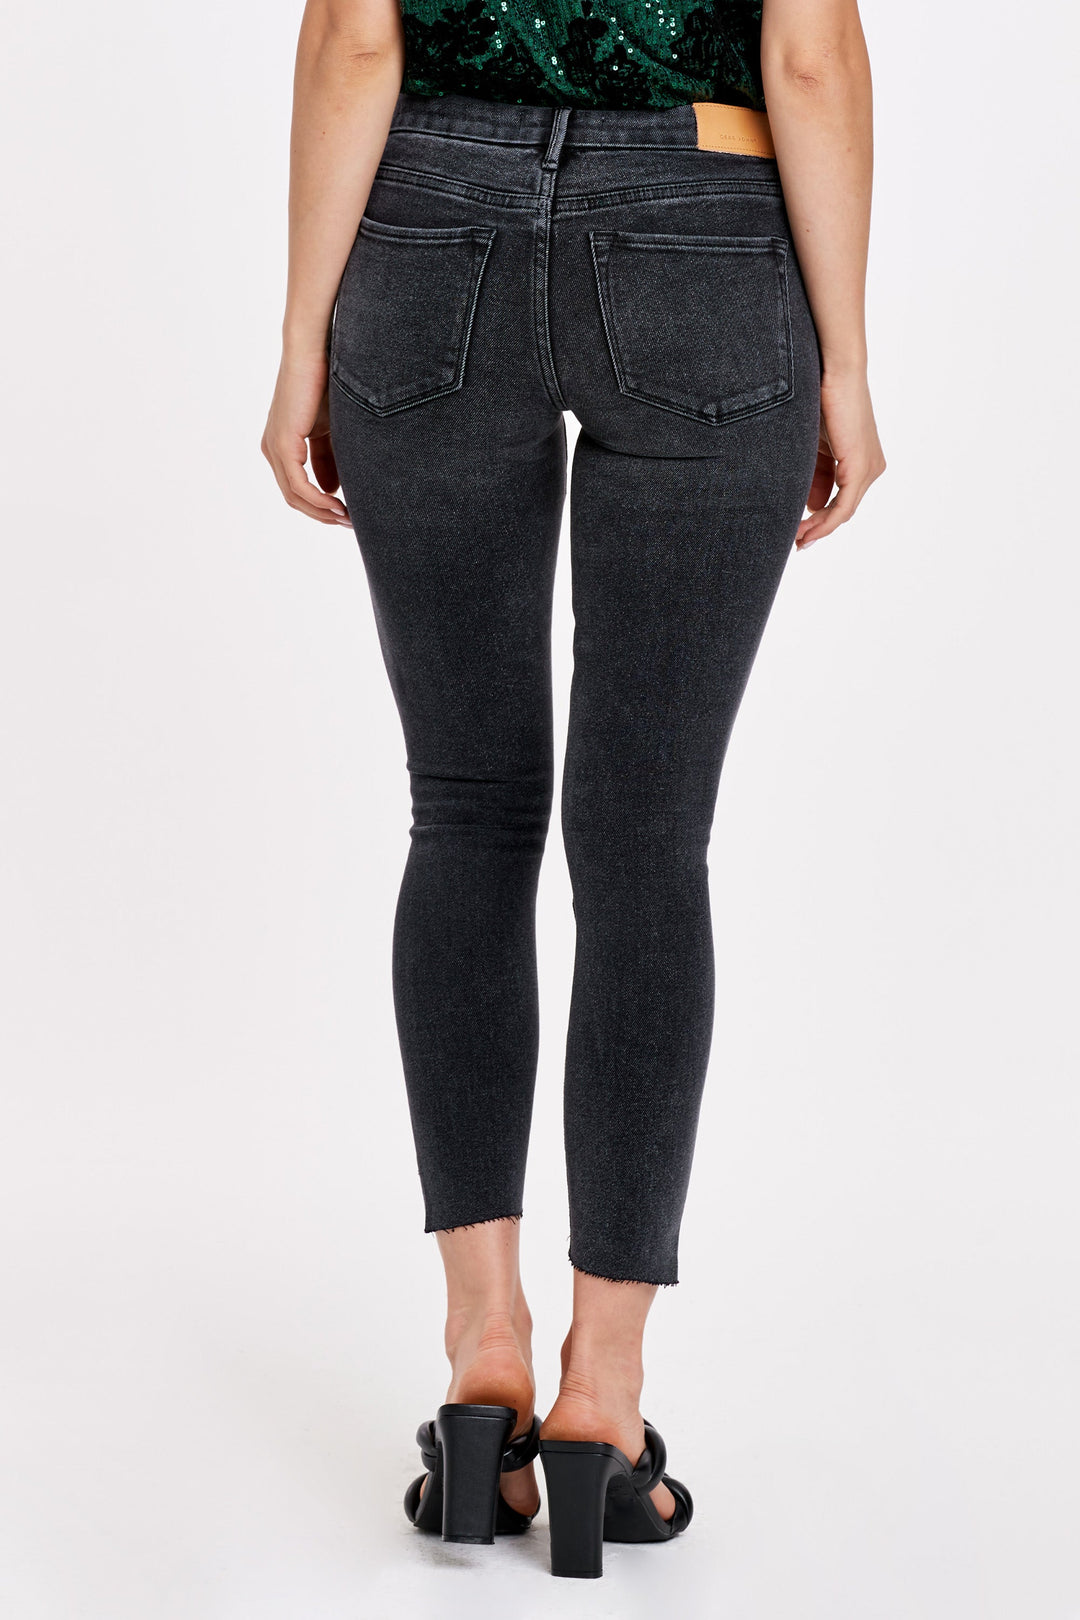 joyrich-mid-rise-skinny-jeans-westvelt